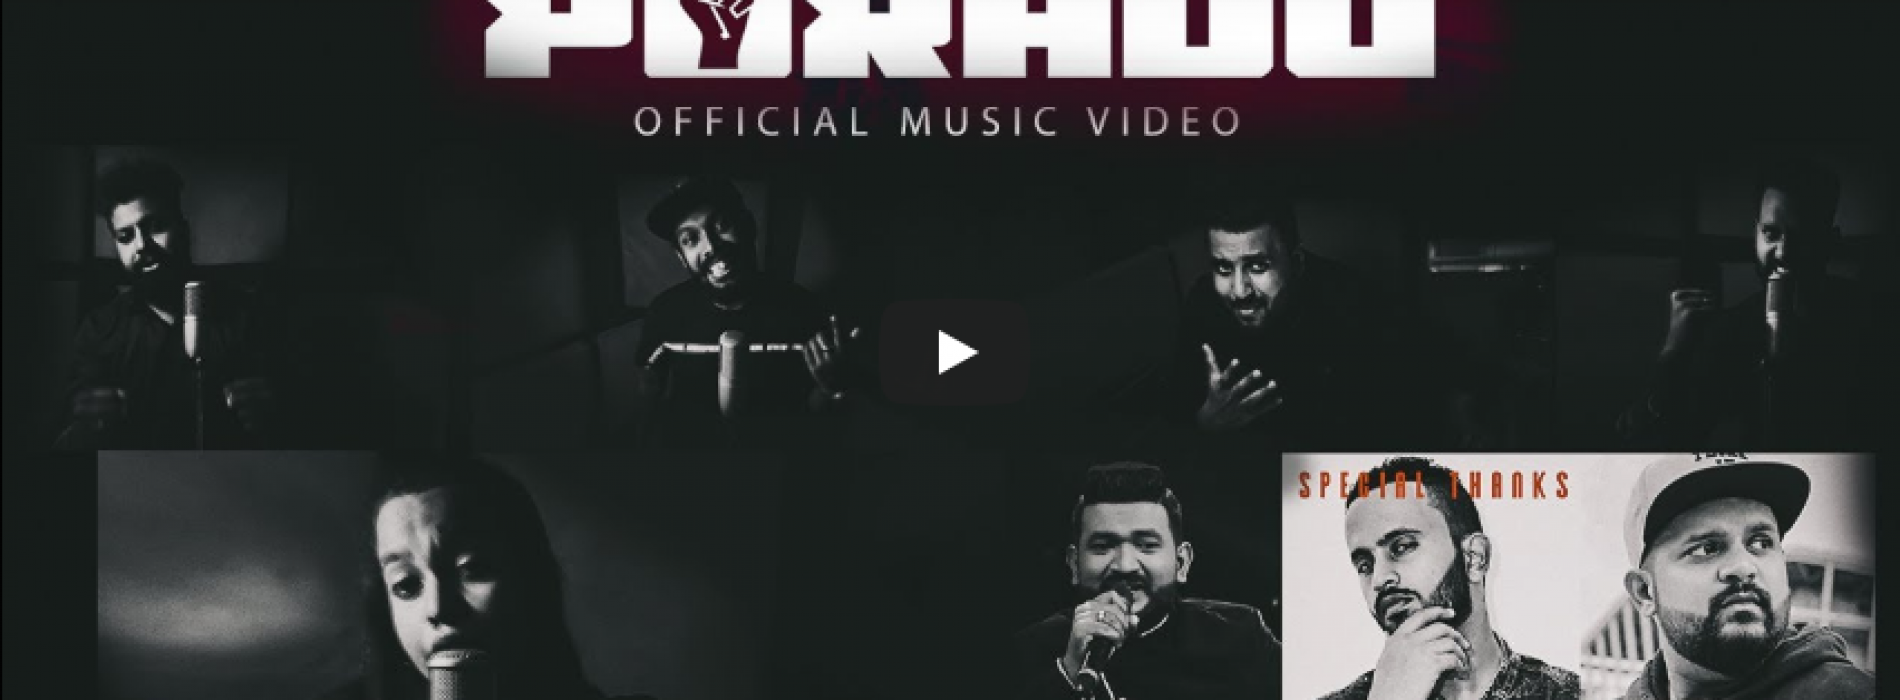 New Music : Poradu – Dedicated to our Heroes | Rowthiran | Sri lanka